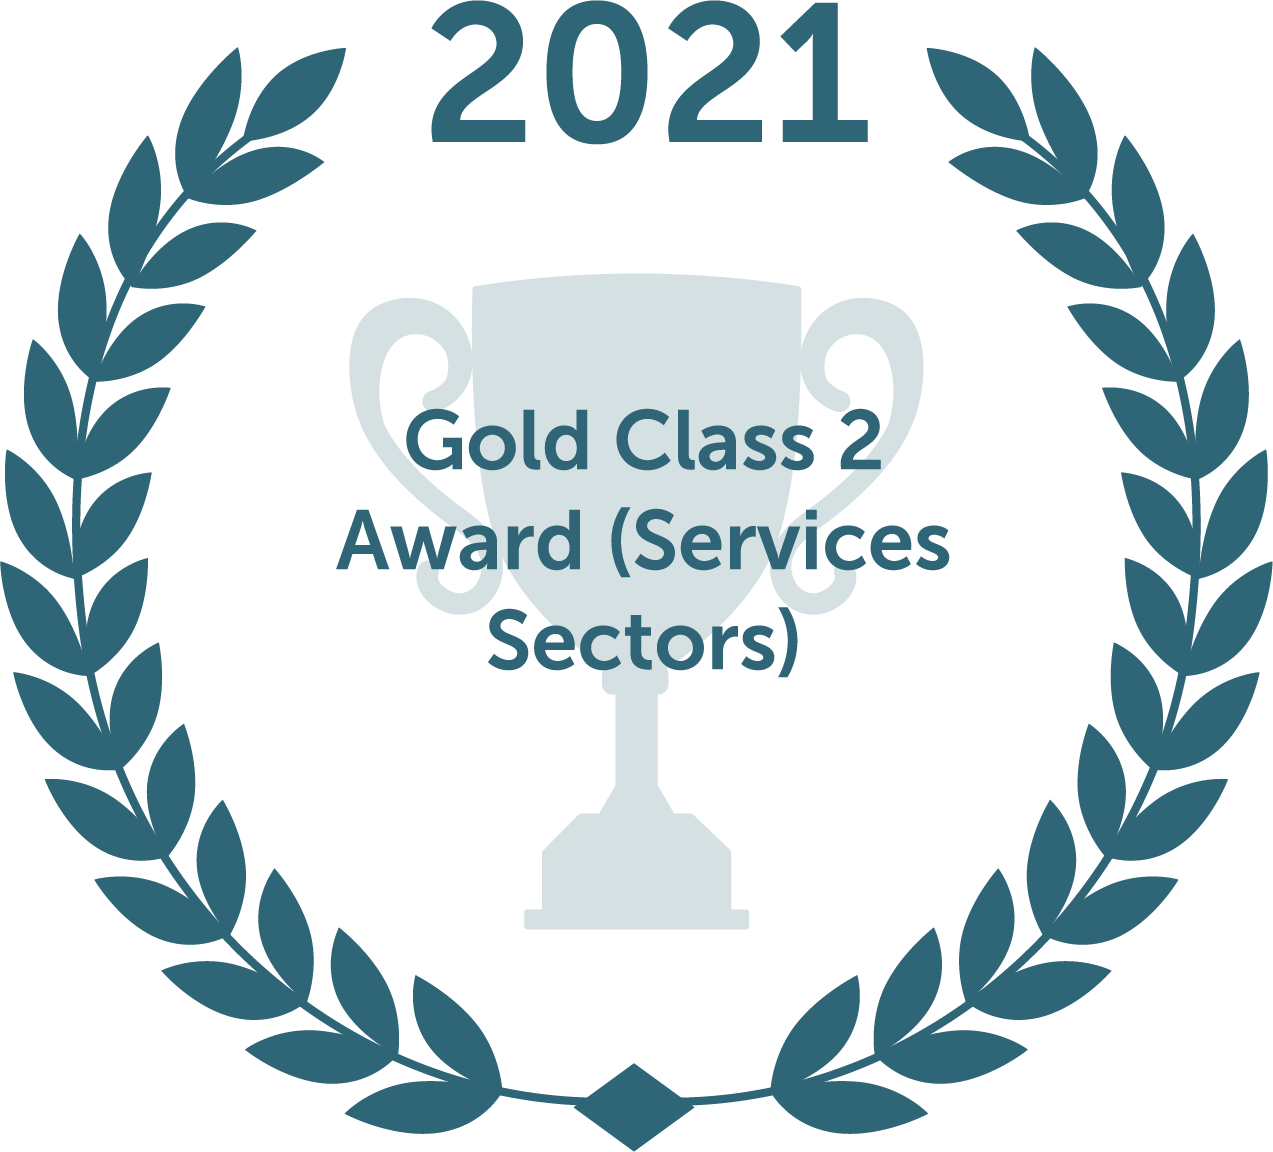 MSOSH Occupational Safety & Health (OSH) Award 2021